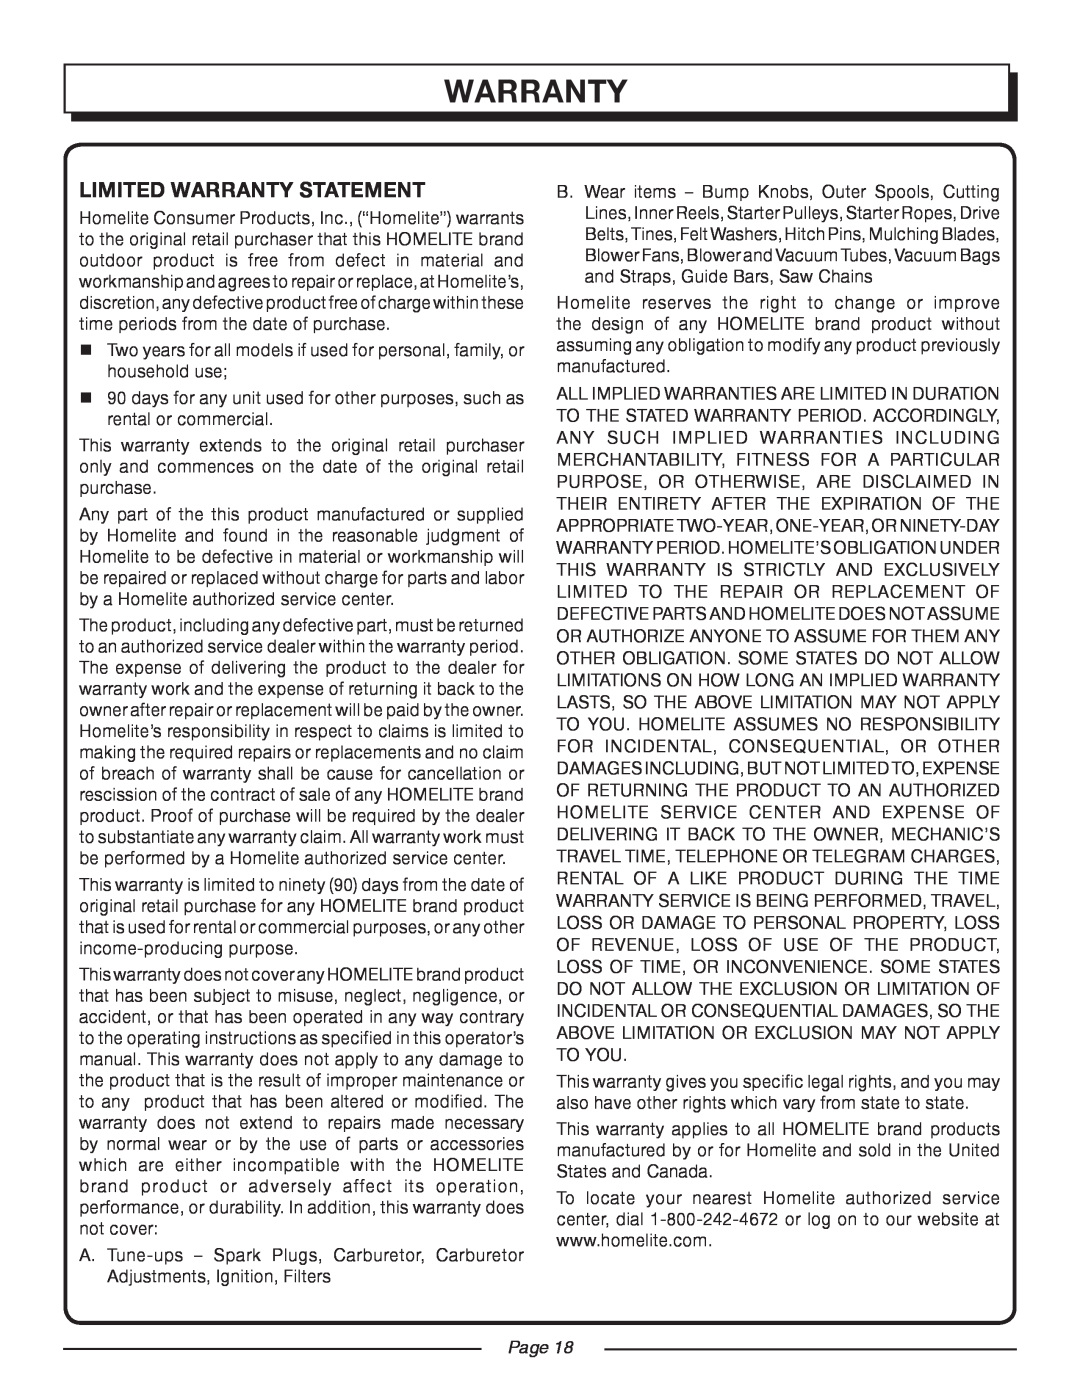 Homelite UT50500, UT50901 manual Limited Warranty Statement, Page 